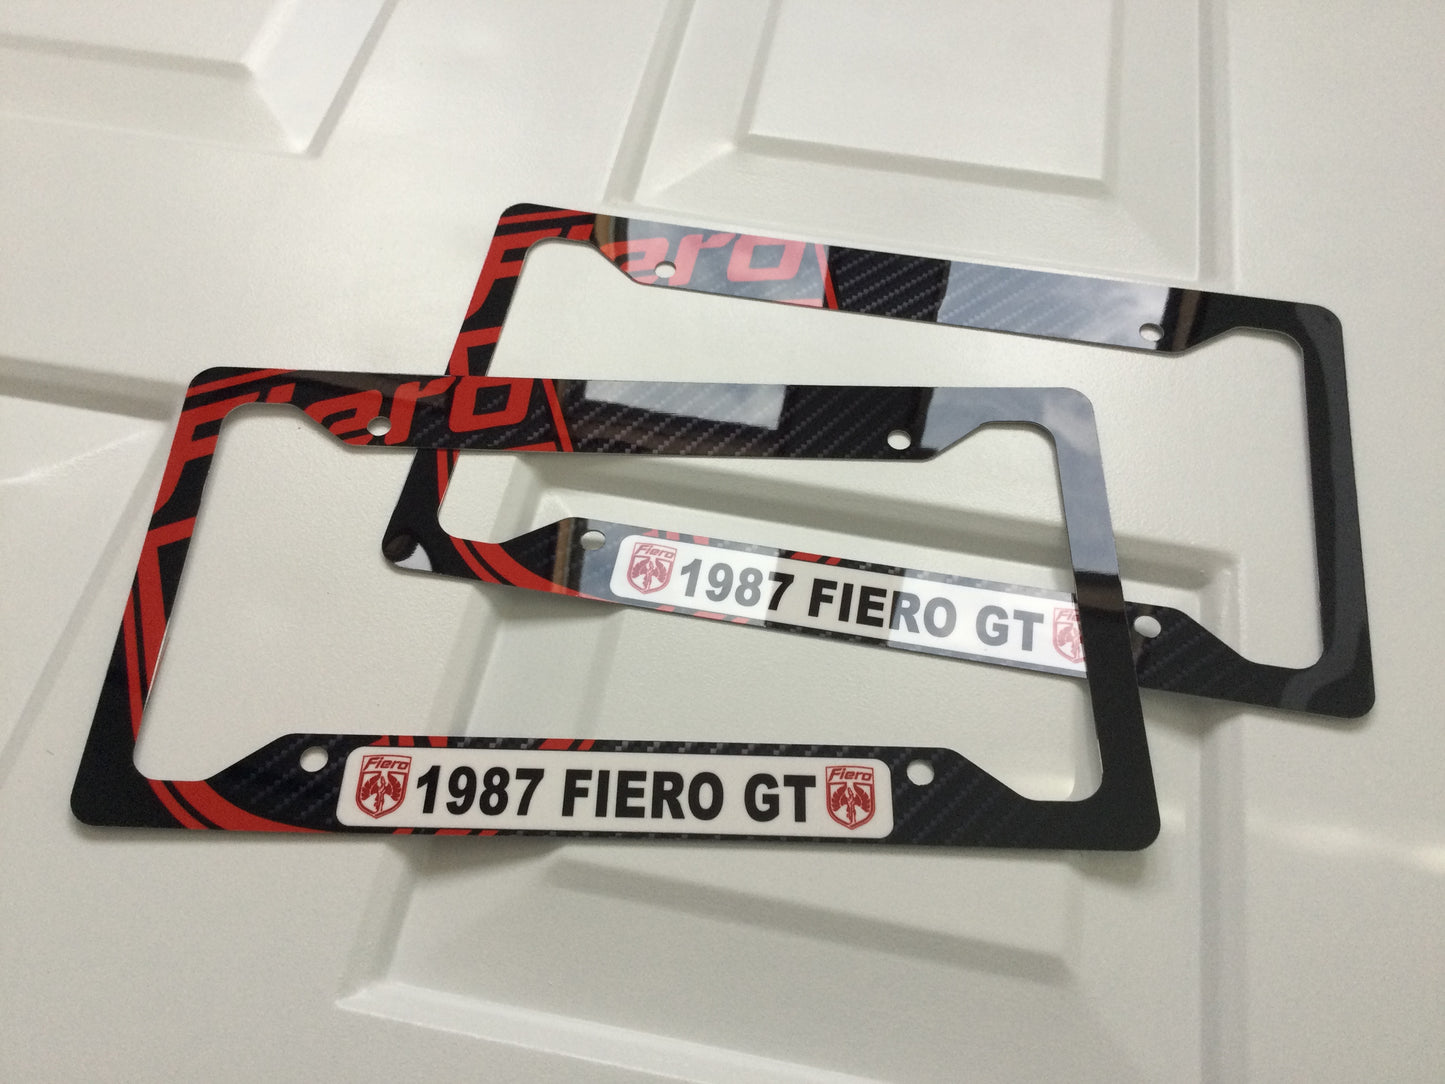 Pontiac Fiero Custom Personalized License Plate Frame Signs